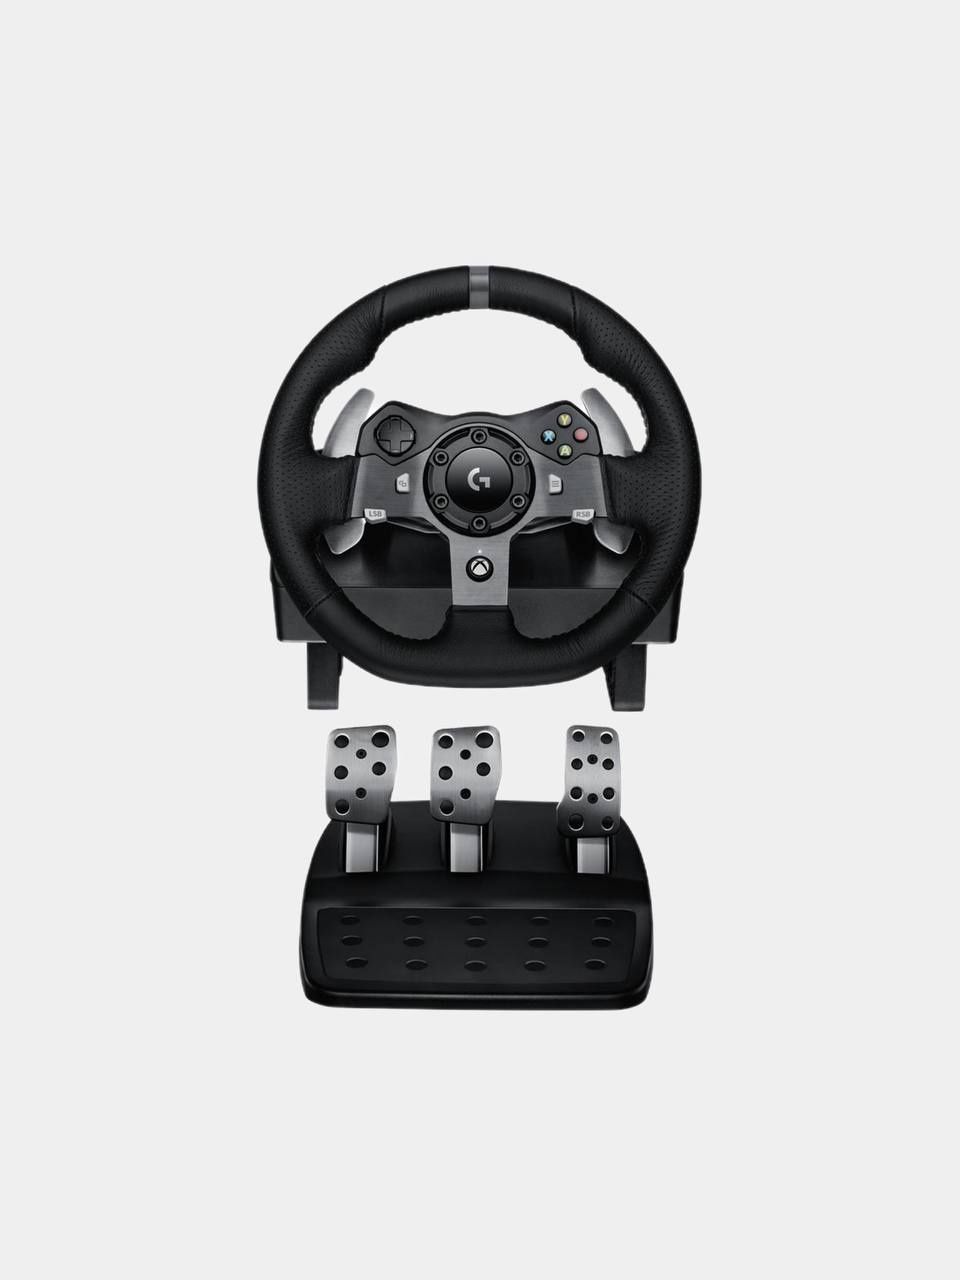 Руль с педалями Logitech G920 для компа и Xbox  Ташкент